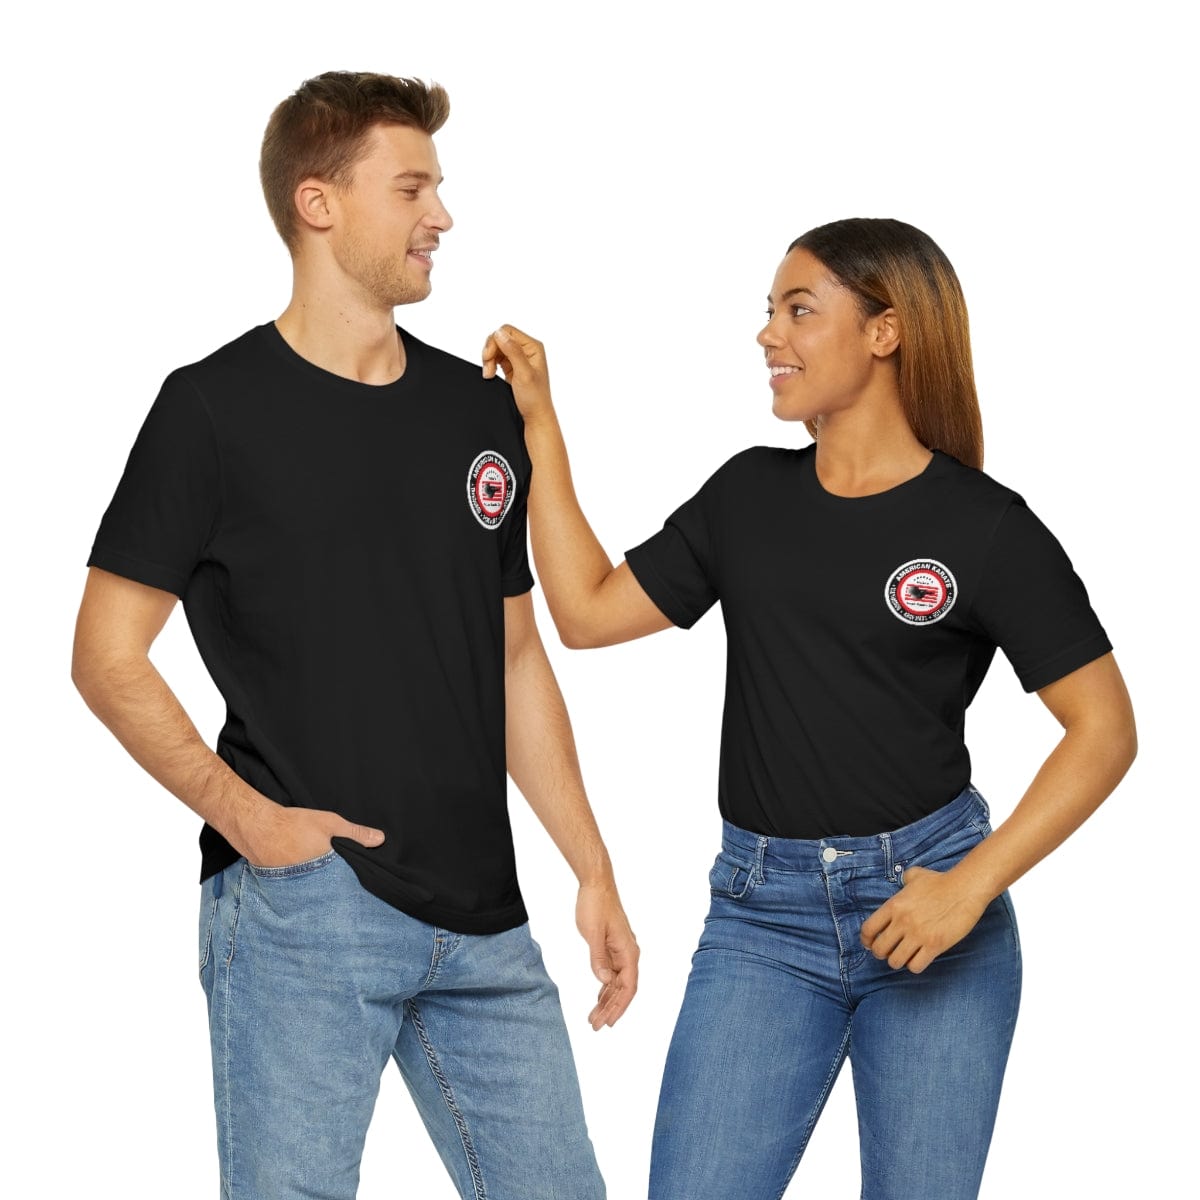 Printify T-Shirt Holans Texas Karate Do Adult T-shirt